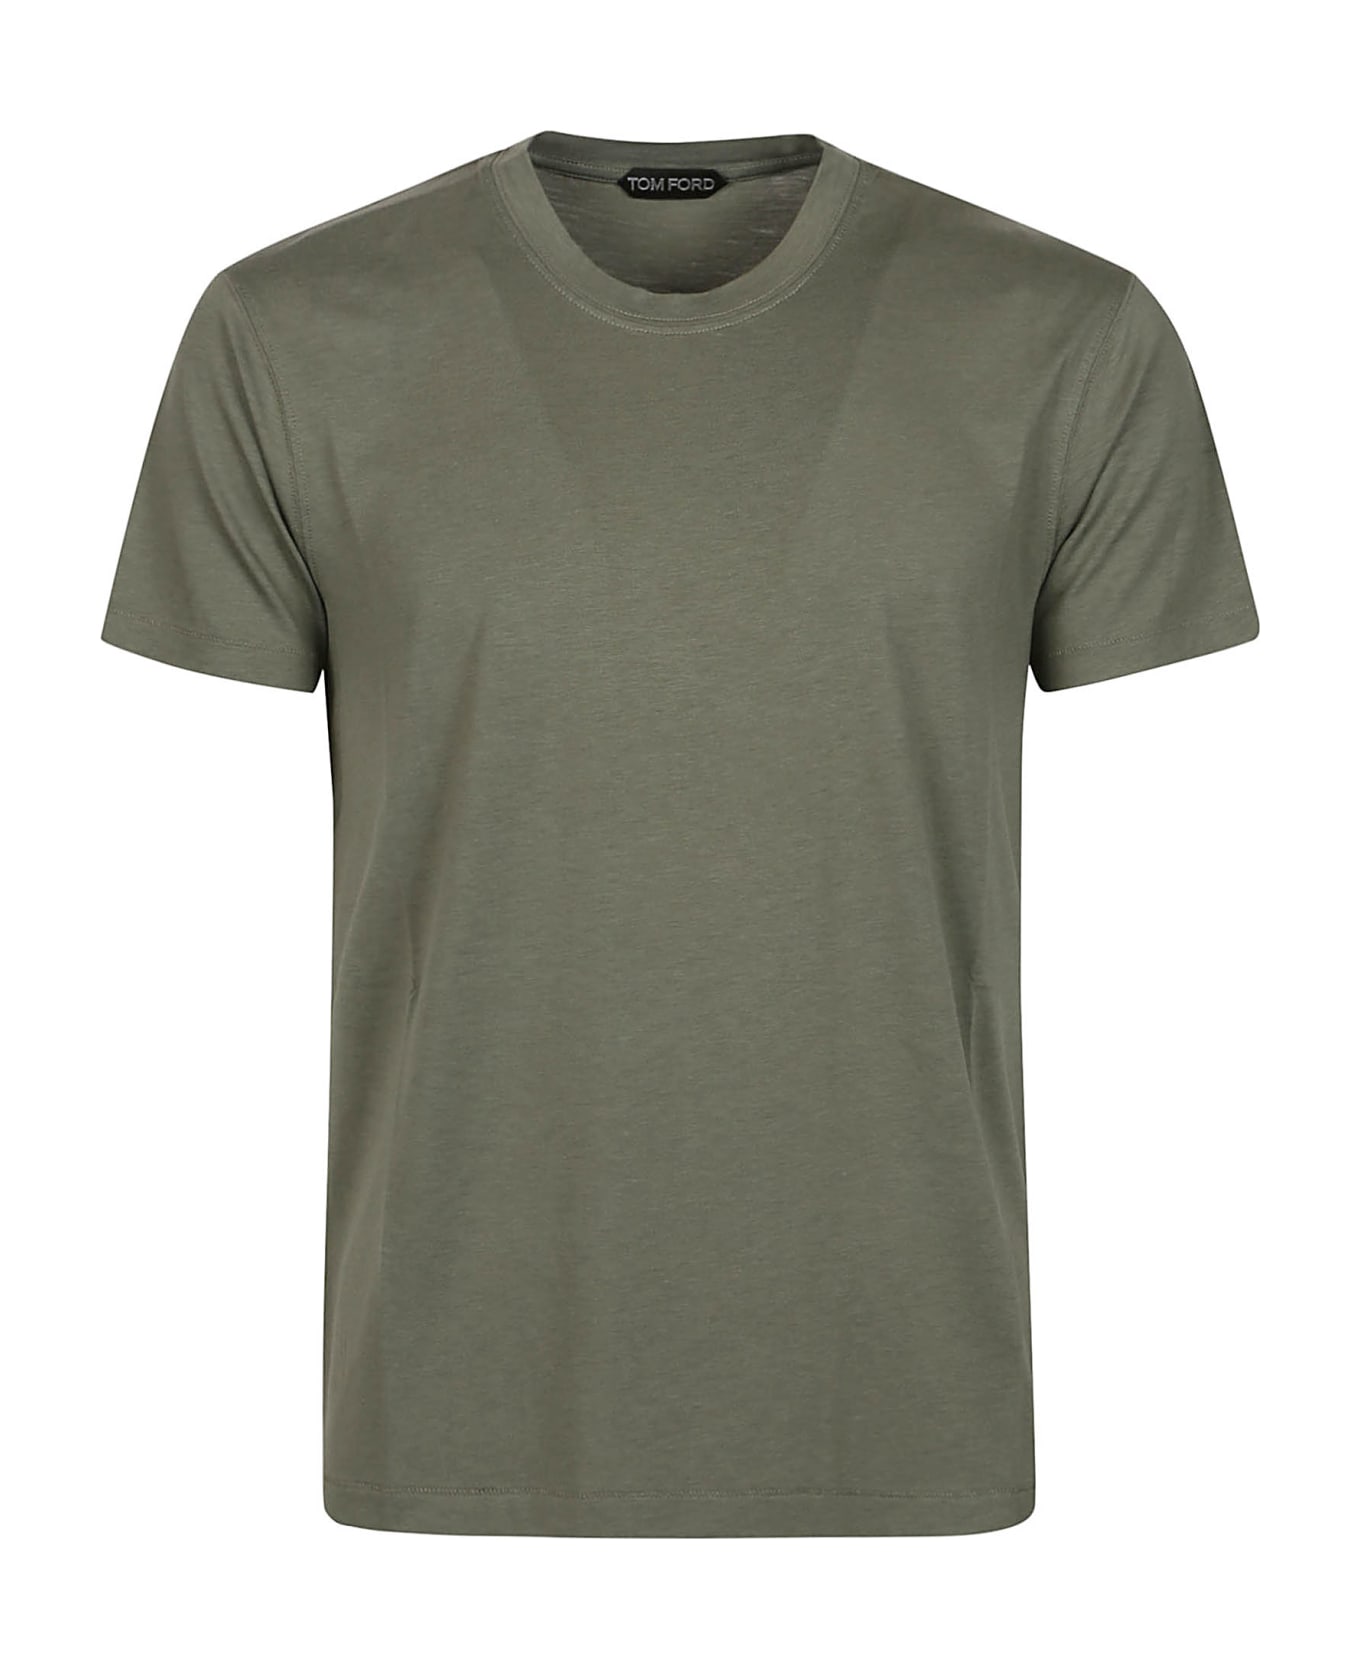 Tom Ford T-shirt - Pale Army